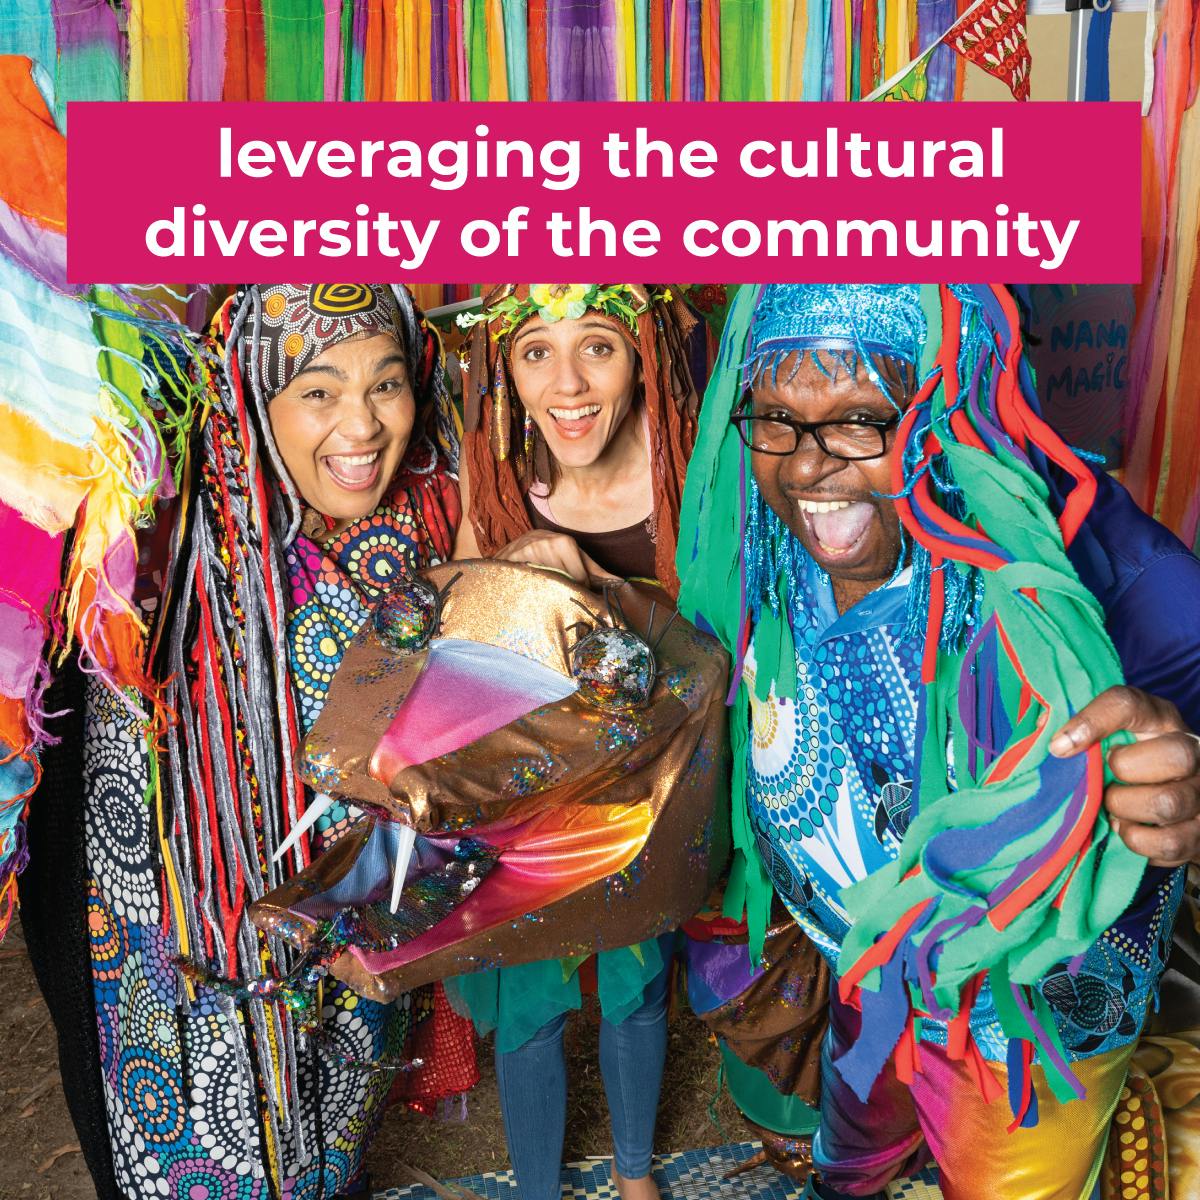 Objective 1 - Leveraging Cultural Diversity